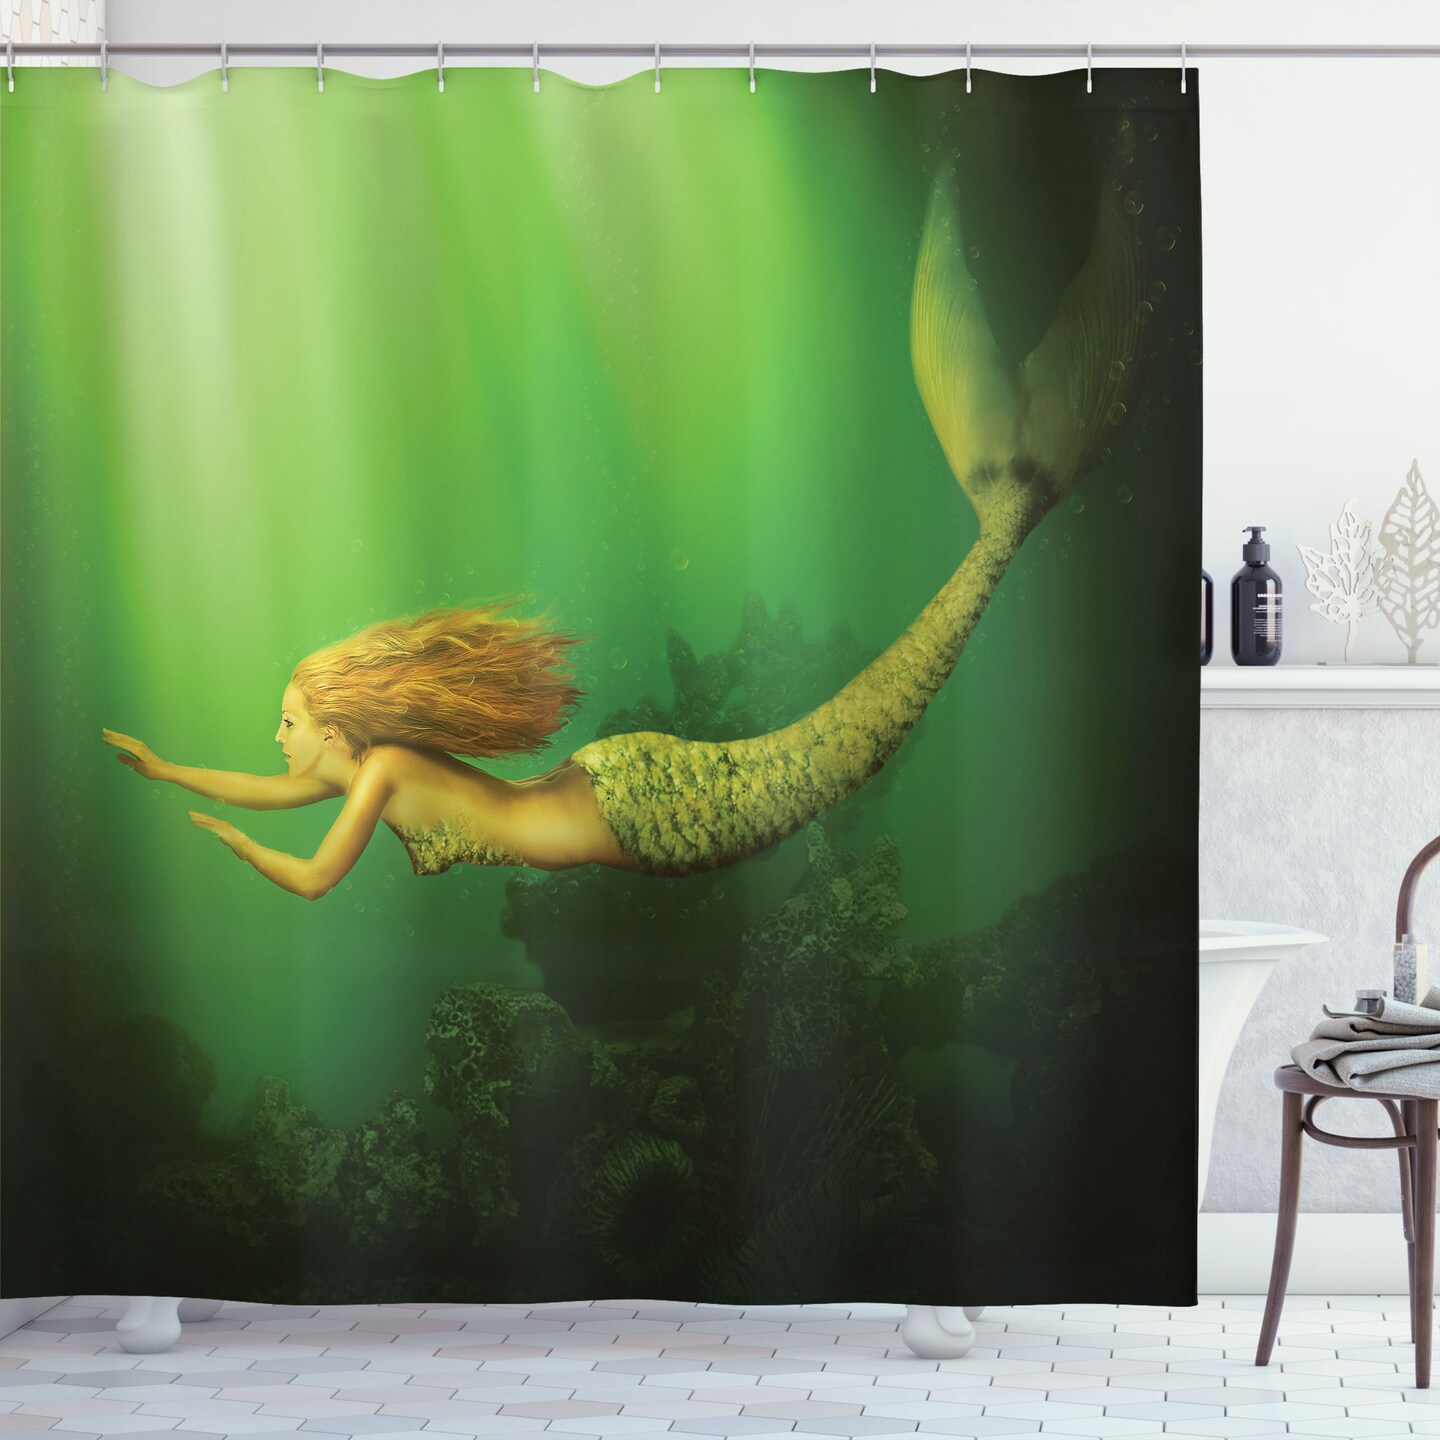 Blue Ocean for Sea Fish Shower Curtain Waterproof Modern Fabric